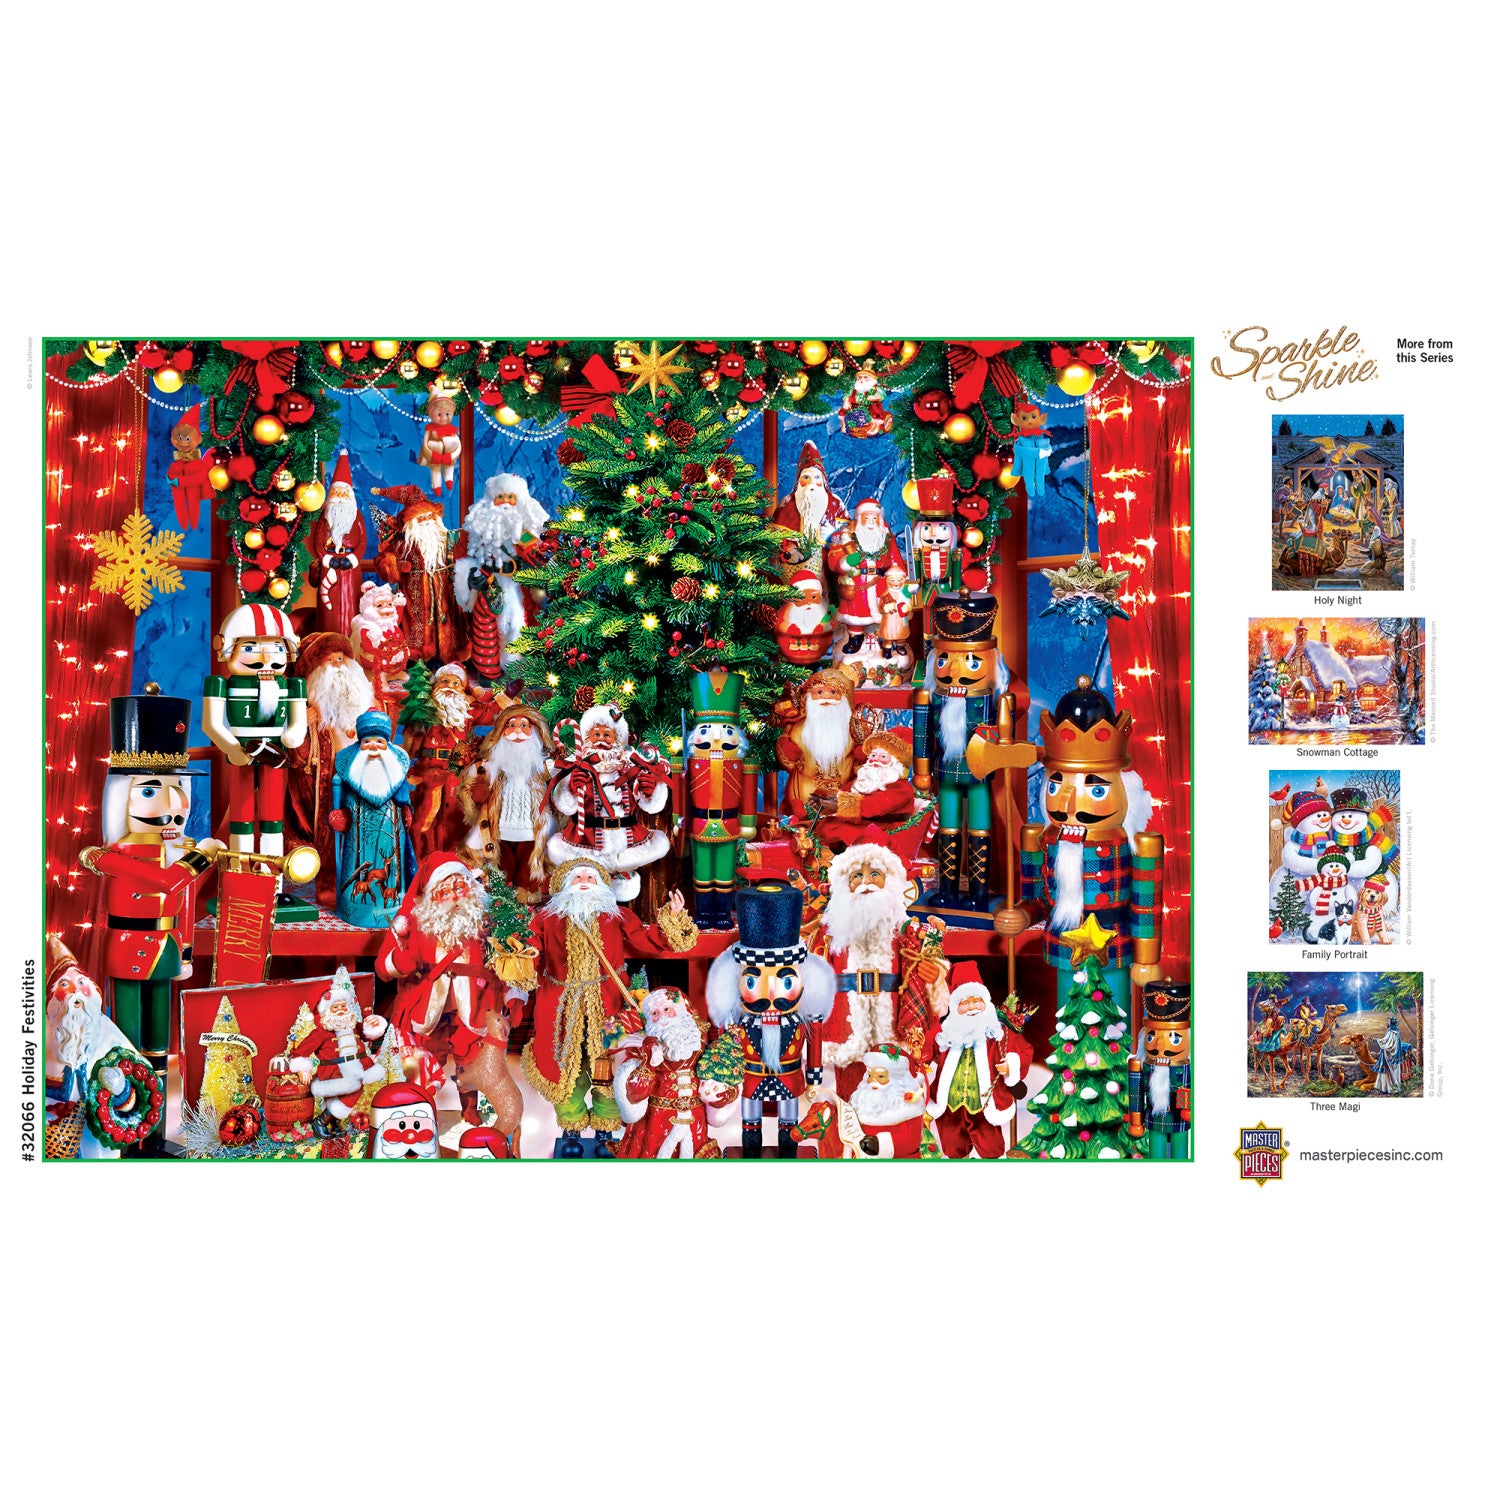 Sparkle & Shine - Holiday Festivities 500 Piece Glitter Jigsaw Puzzle